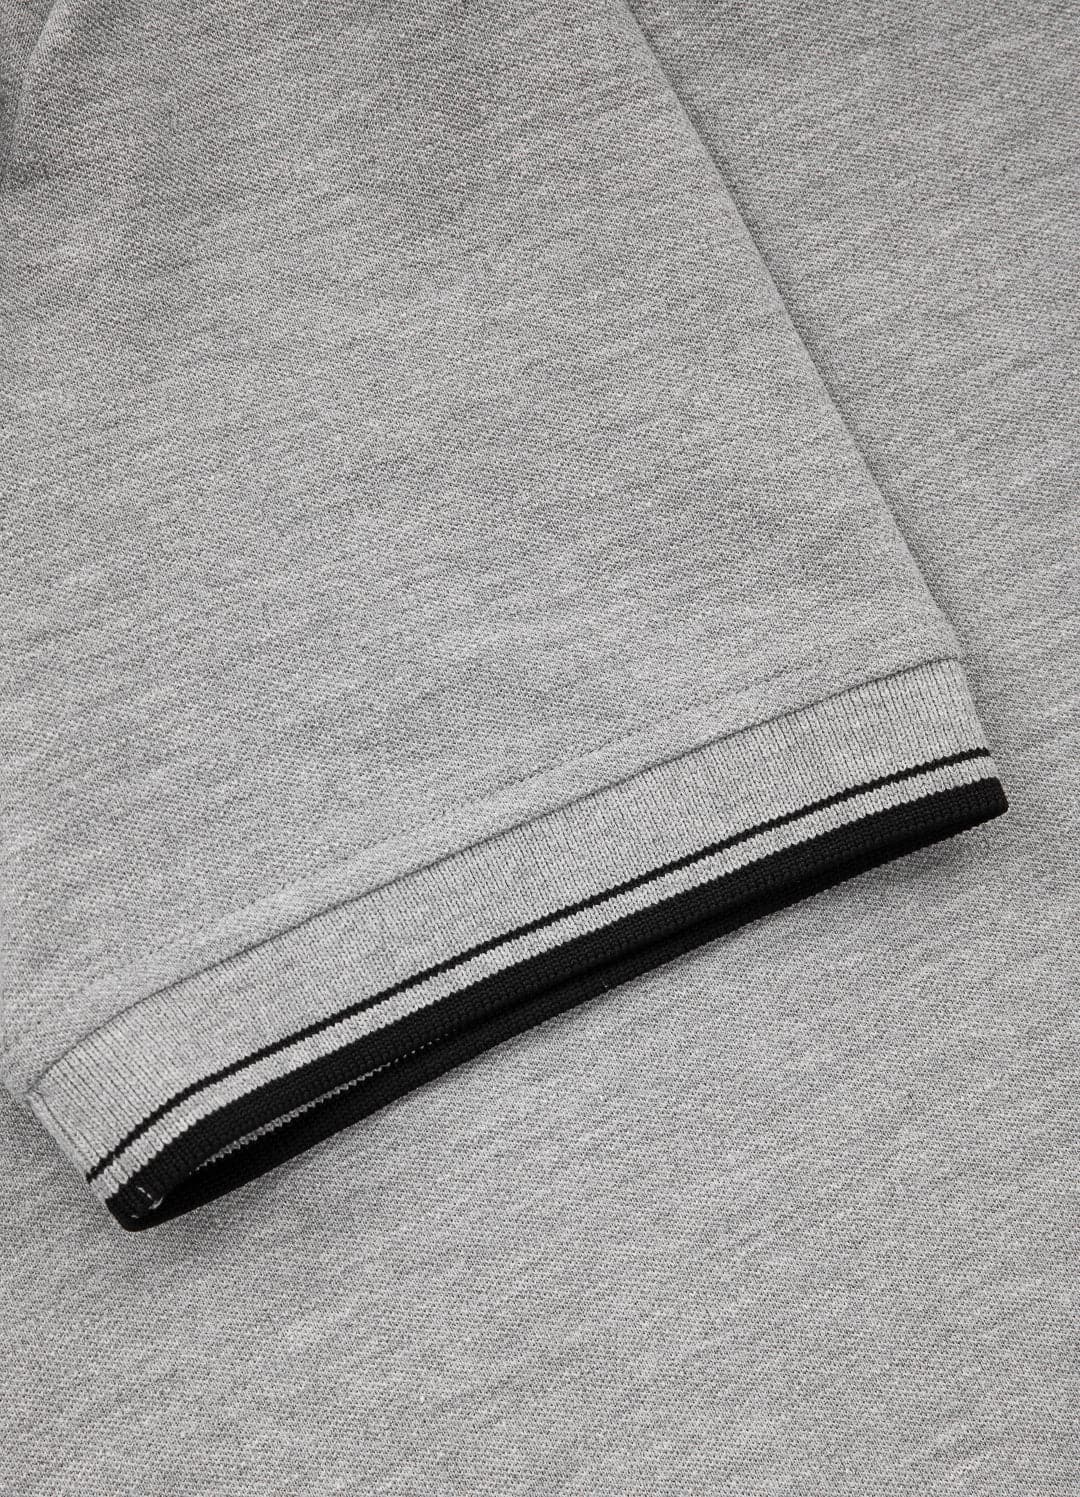 POLO REGULAR STRIPES Spandex Grey T-shirt.